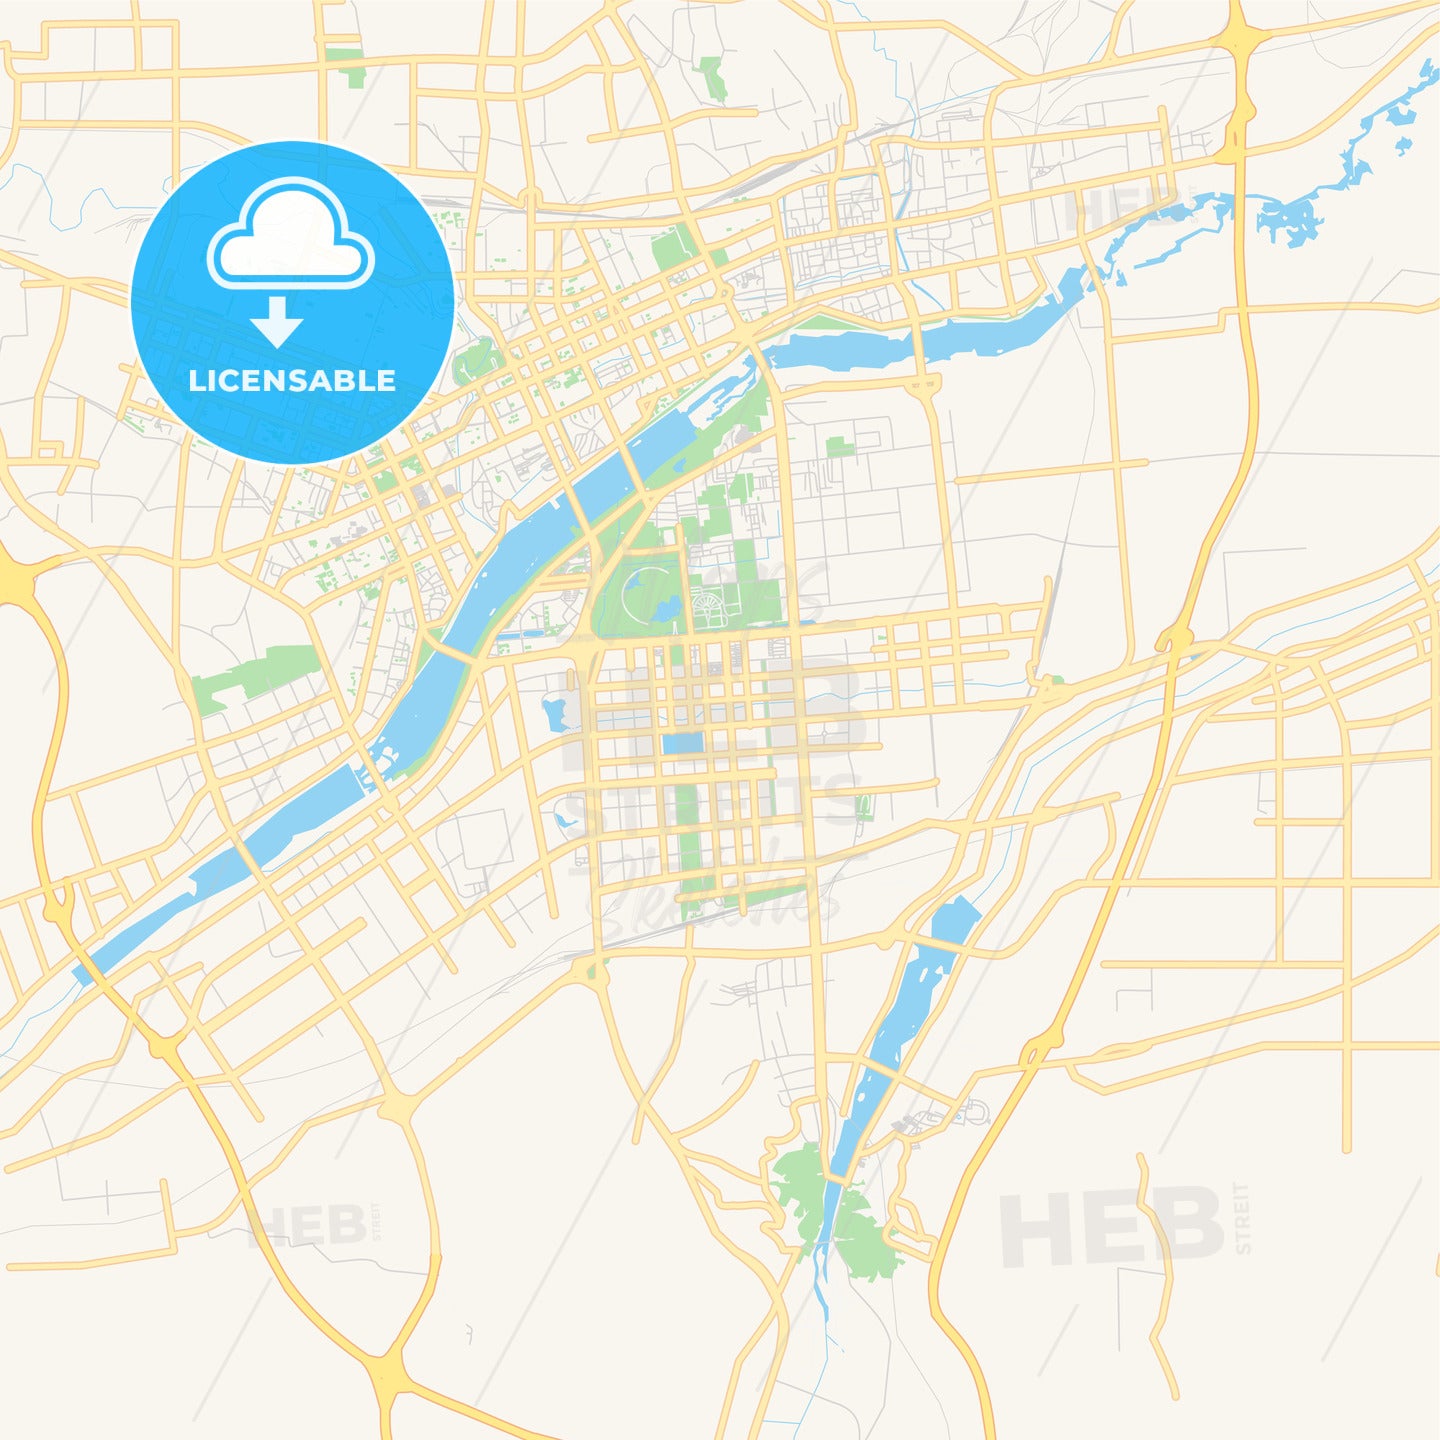 Printable street map of Luoyang, China